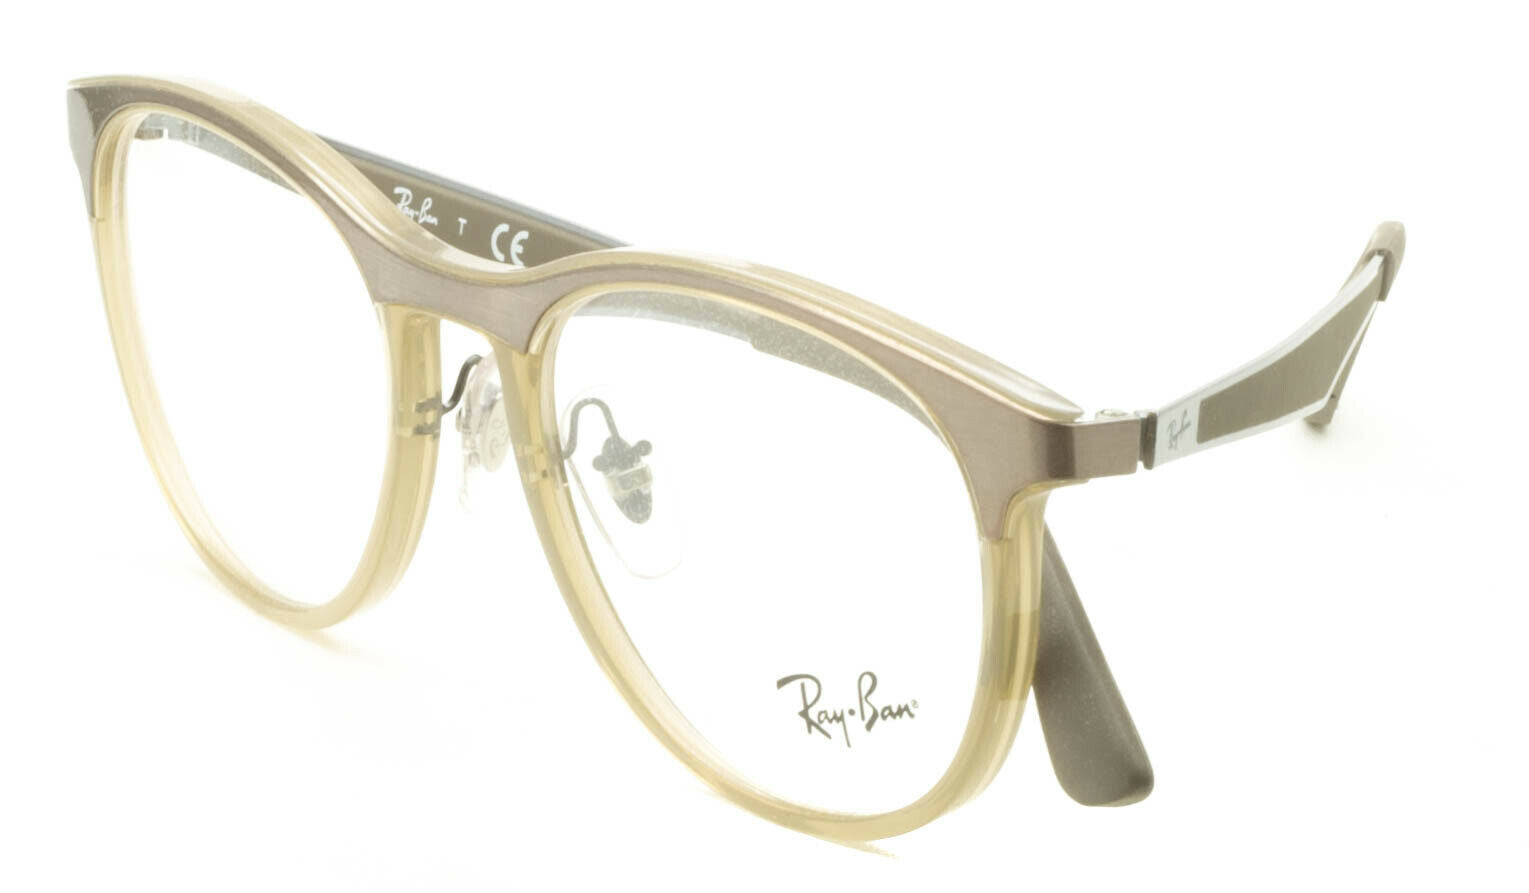 RAY BAN RB 7116 8018 51mm FRAMES RAYBAN Glasses RX Optical Eyewear